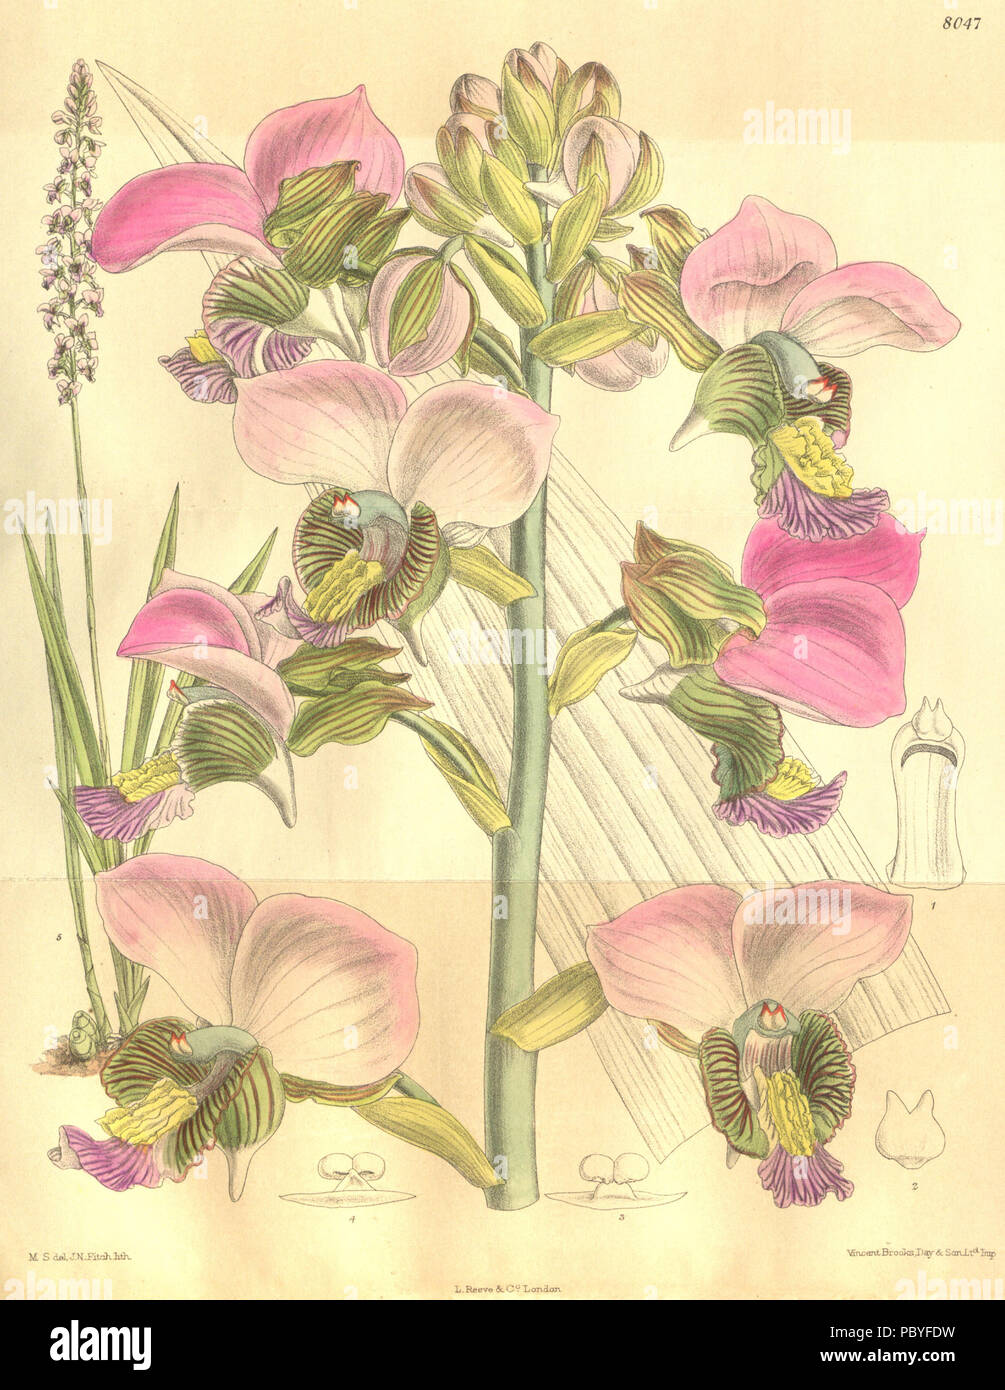 198 Eulophia rosea (as Lissochilus mahonii, spelled Lissochilus mahoni) - Curtis' 131 (Ser. 4 no. 1) pl. 8047 Stock Photo